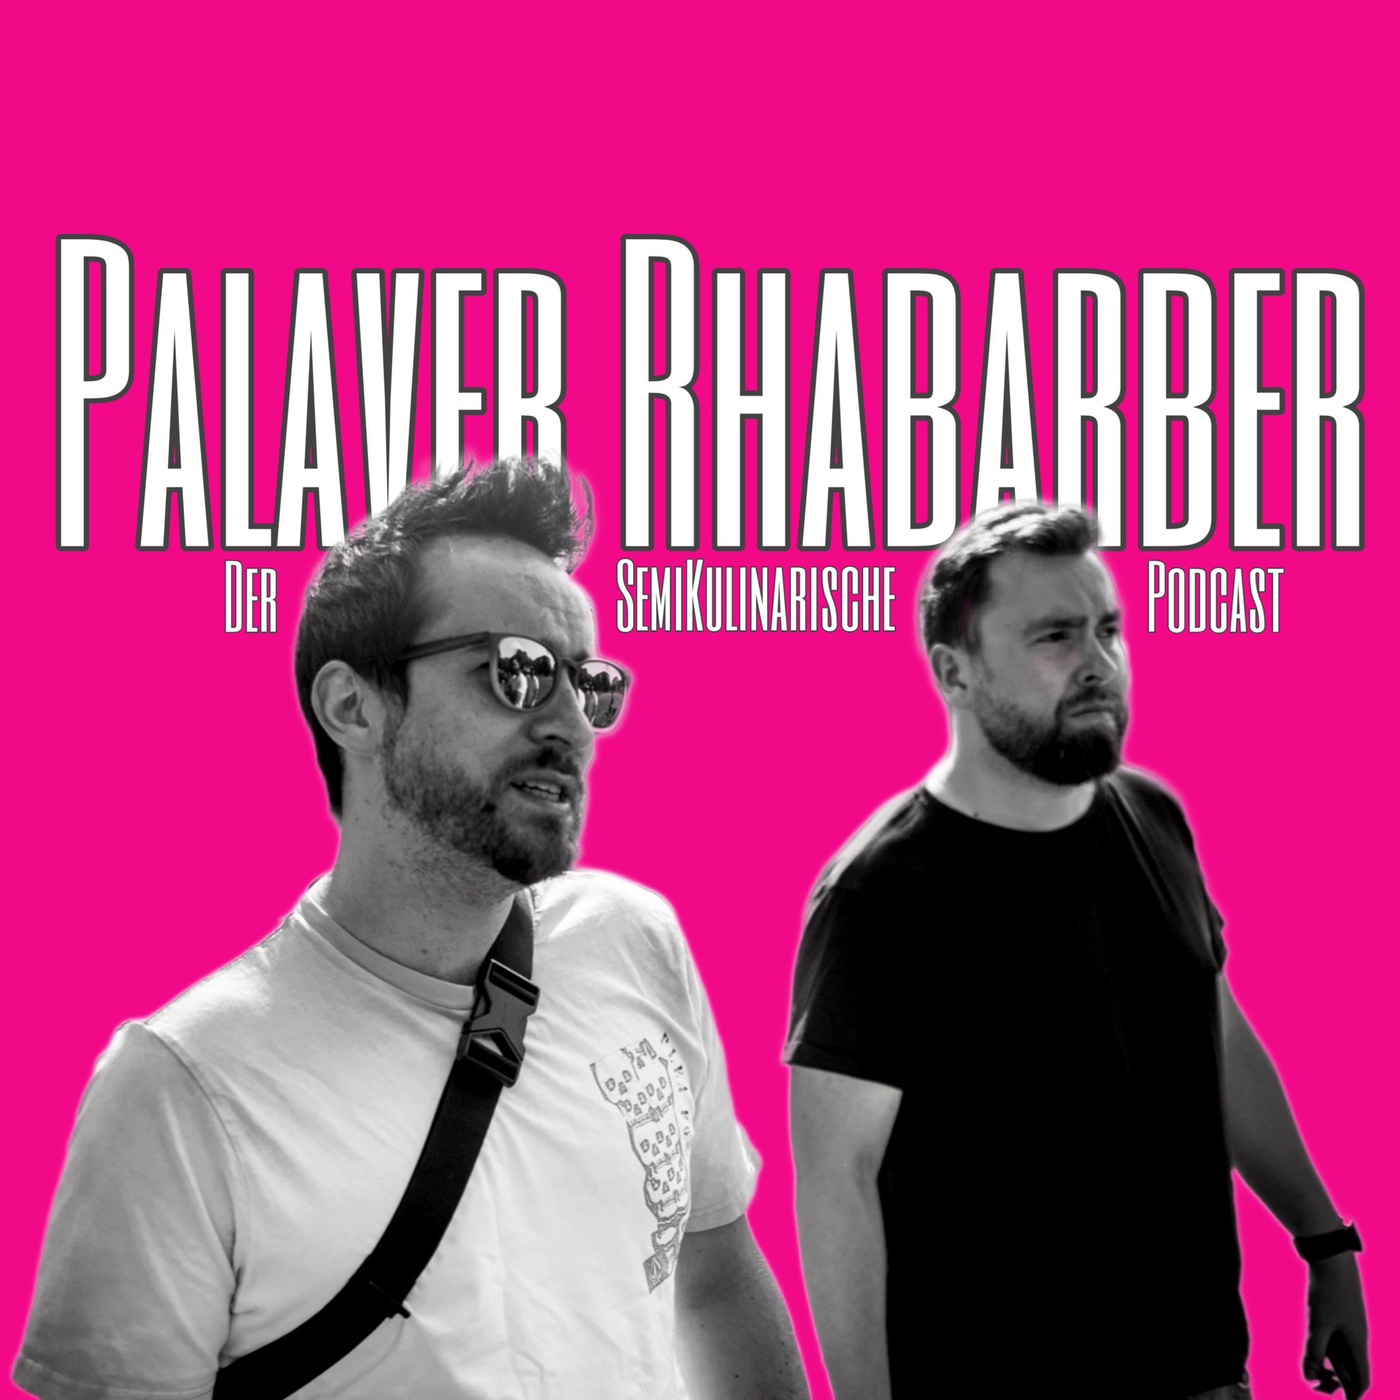 Palaver Rhabarber